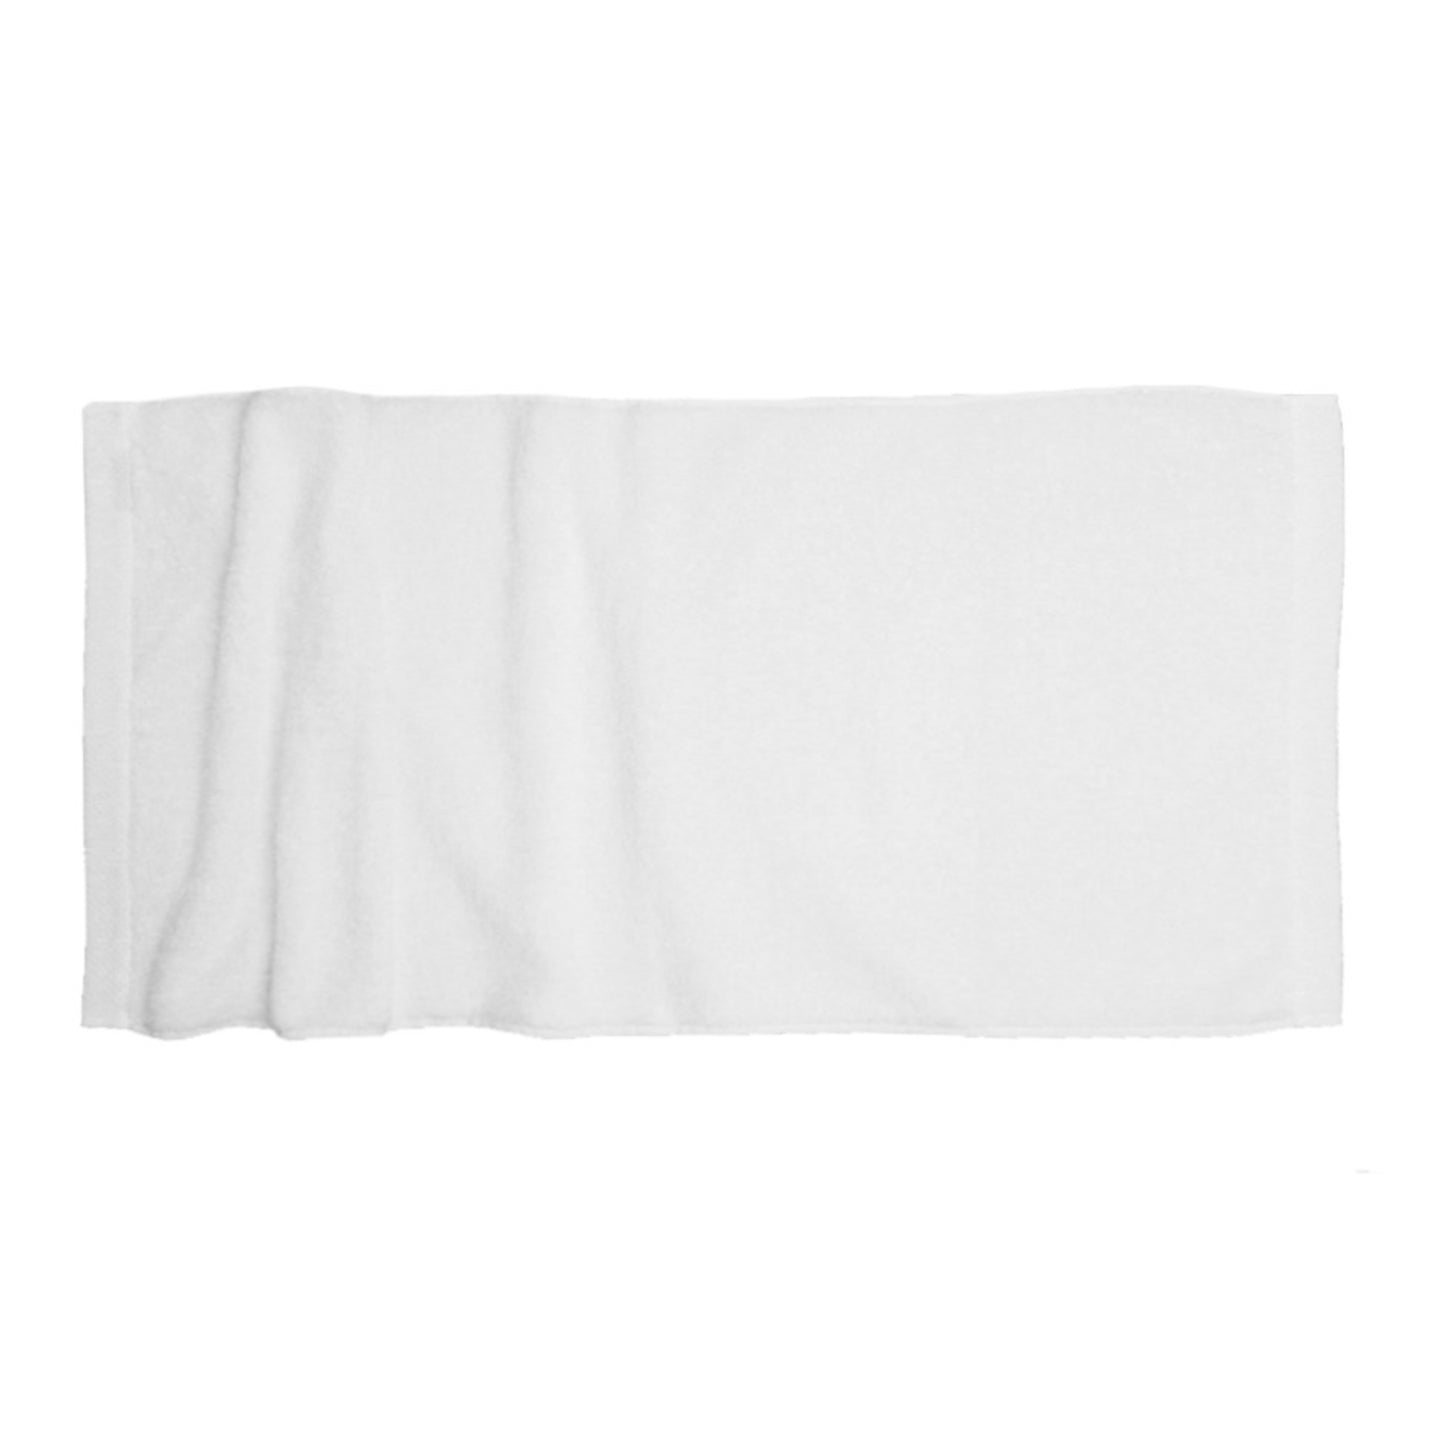 Luxury Bath Sheet 550 GSM 100% Cotton